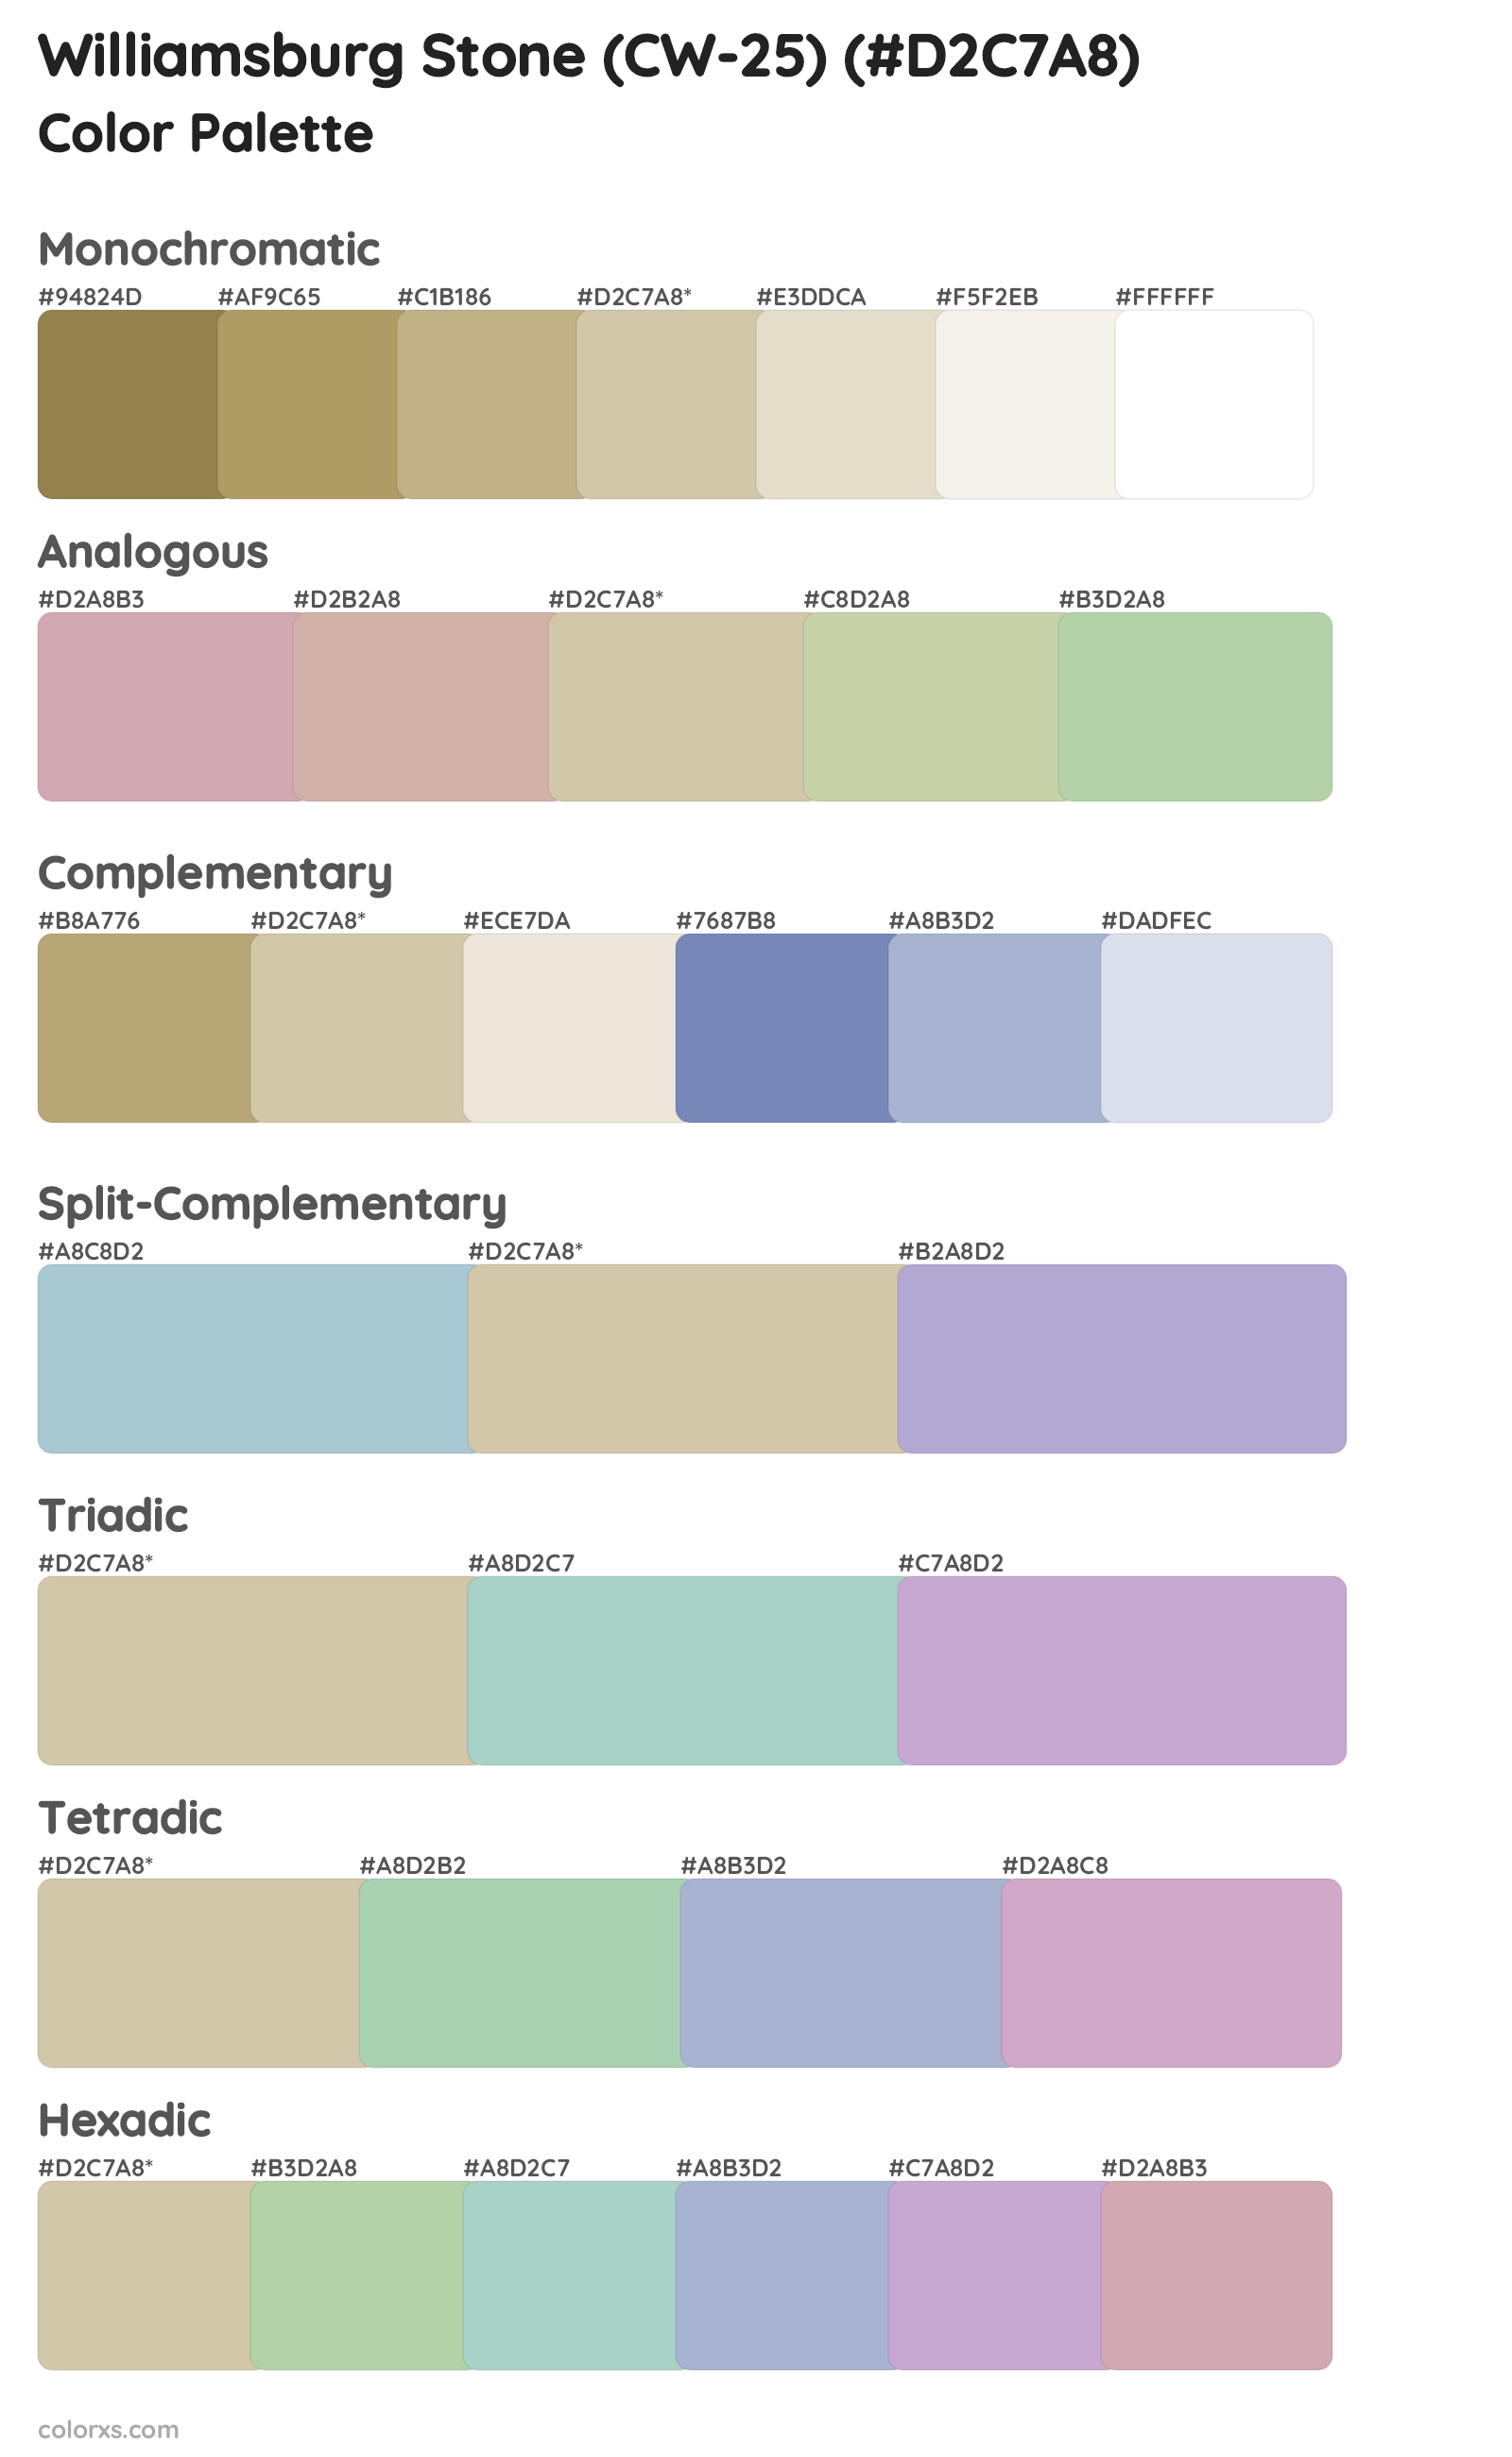 Williamsburg Stone (CW-25) Color Scheme Palettes